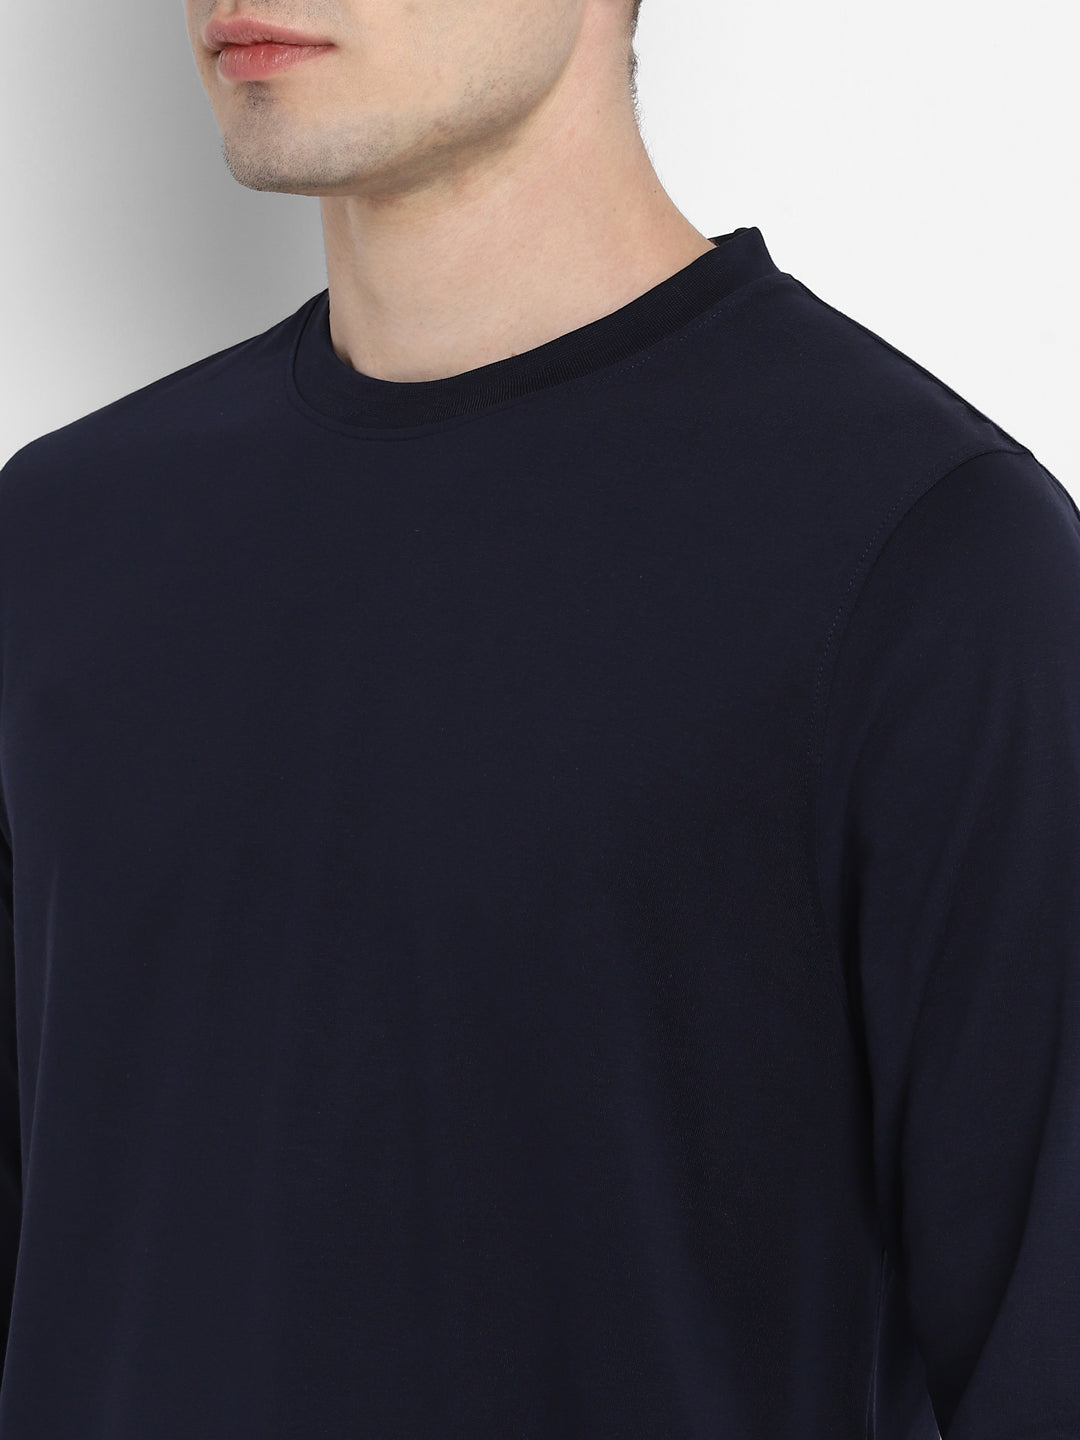 Supima Cotton Round Neck Full Sleeves T-Shirt for Men - Navy Blue